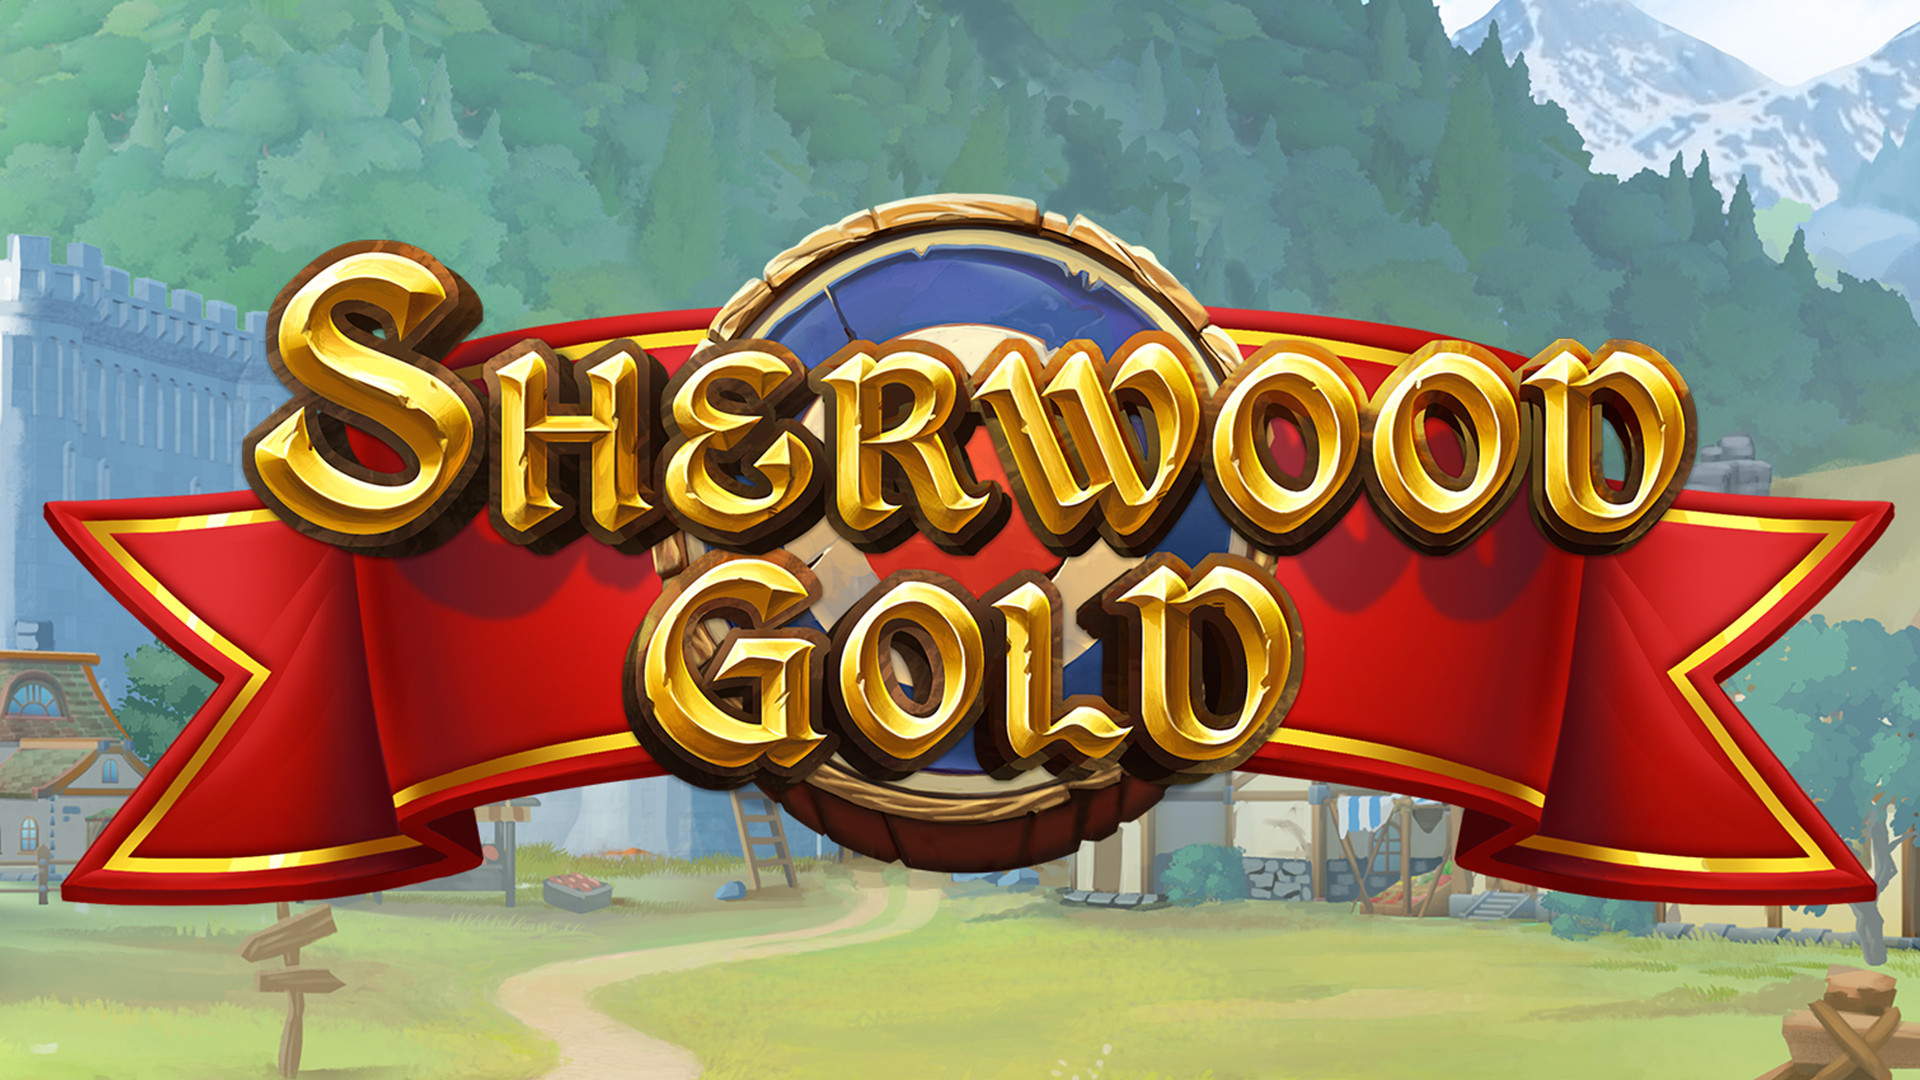 Sherwood Gold